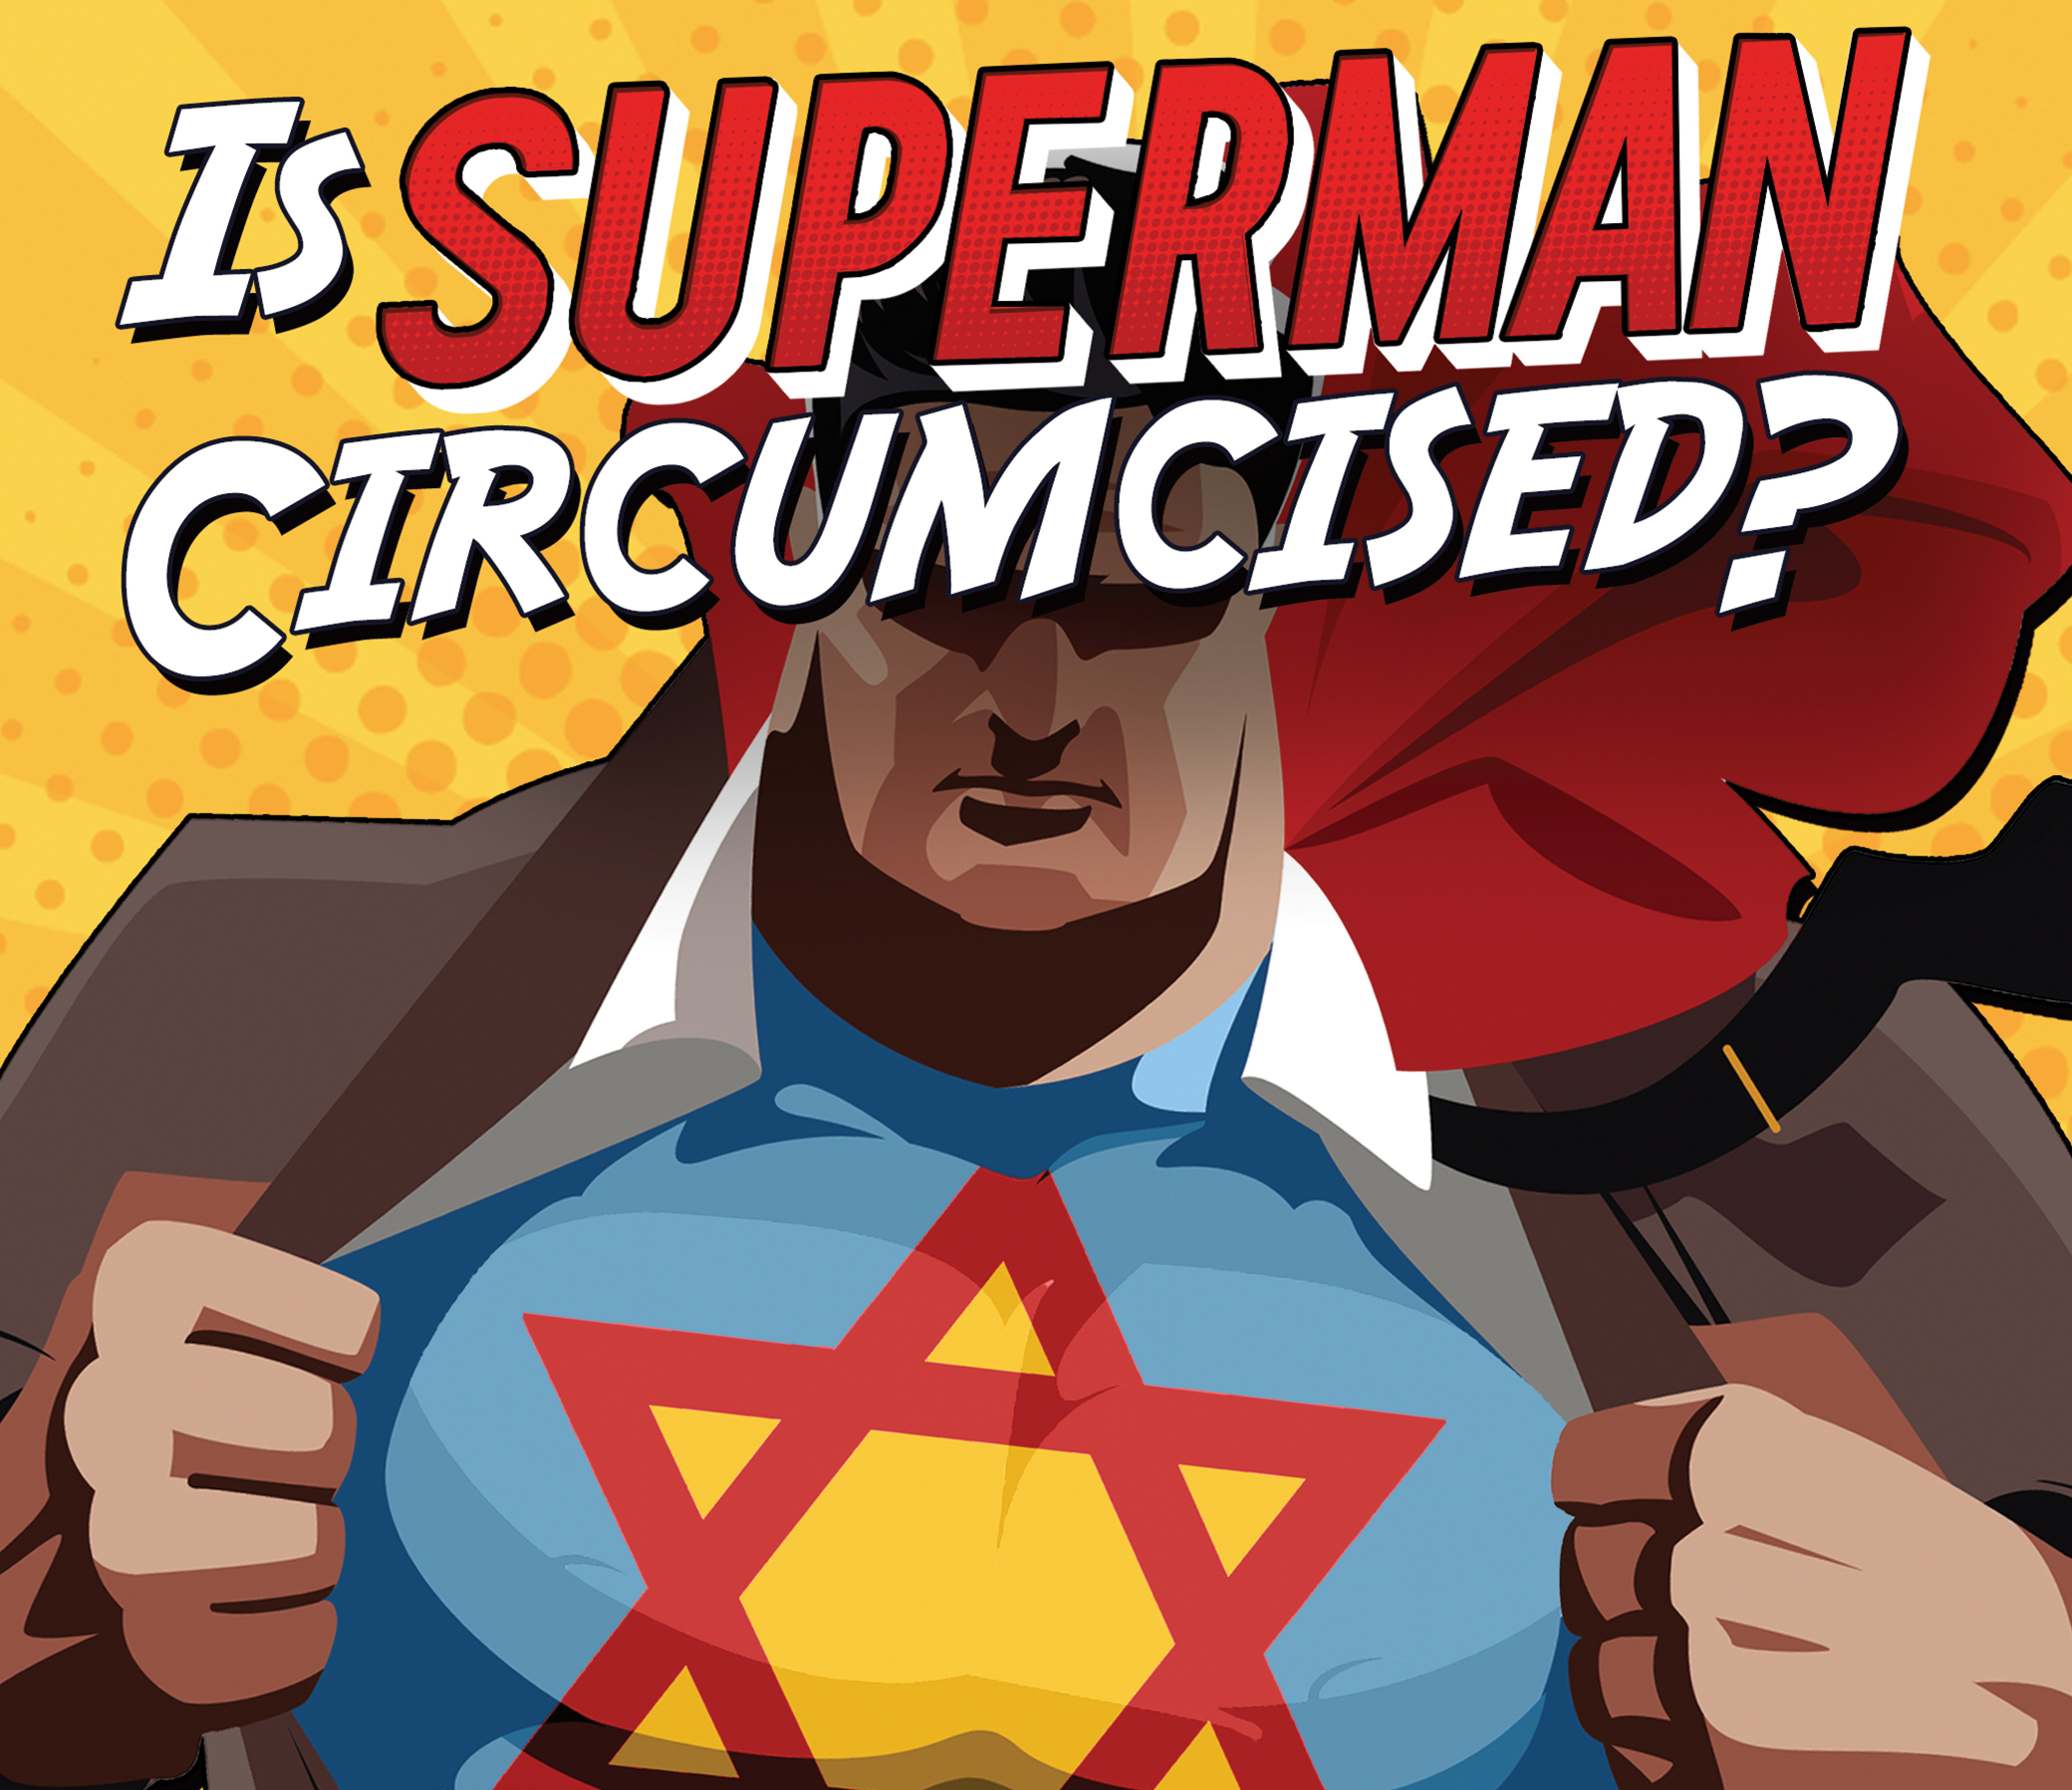 Is Superman Circumcised? by Roy Schwartz